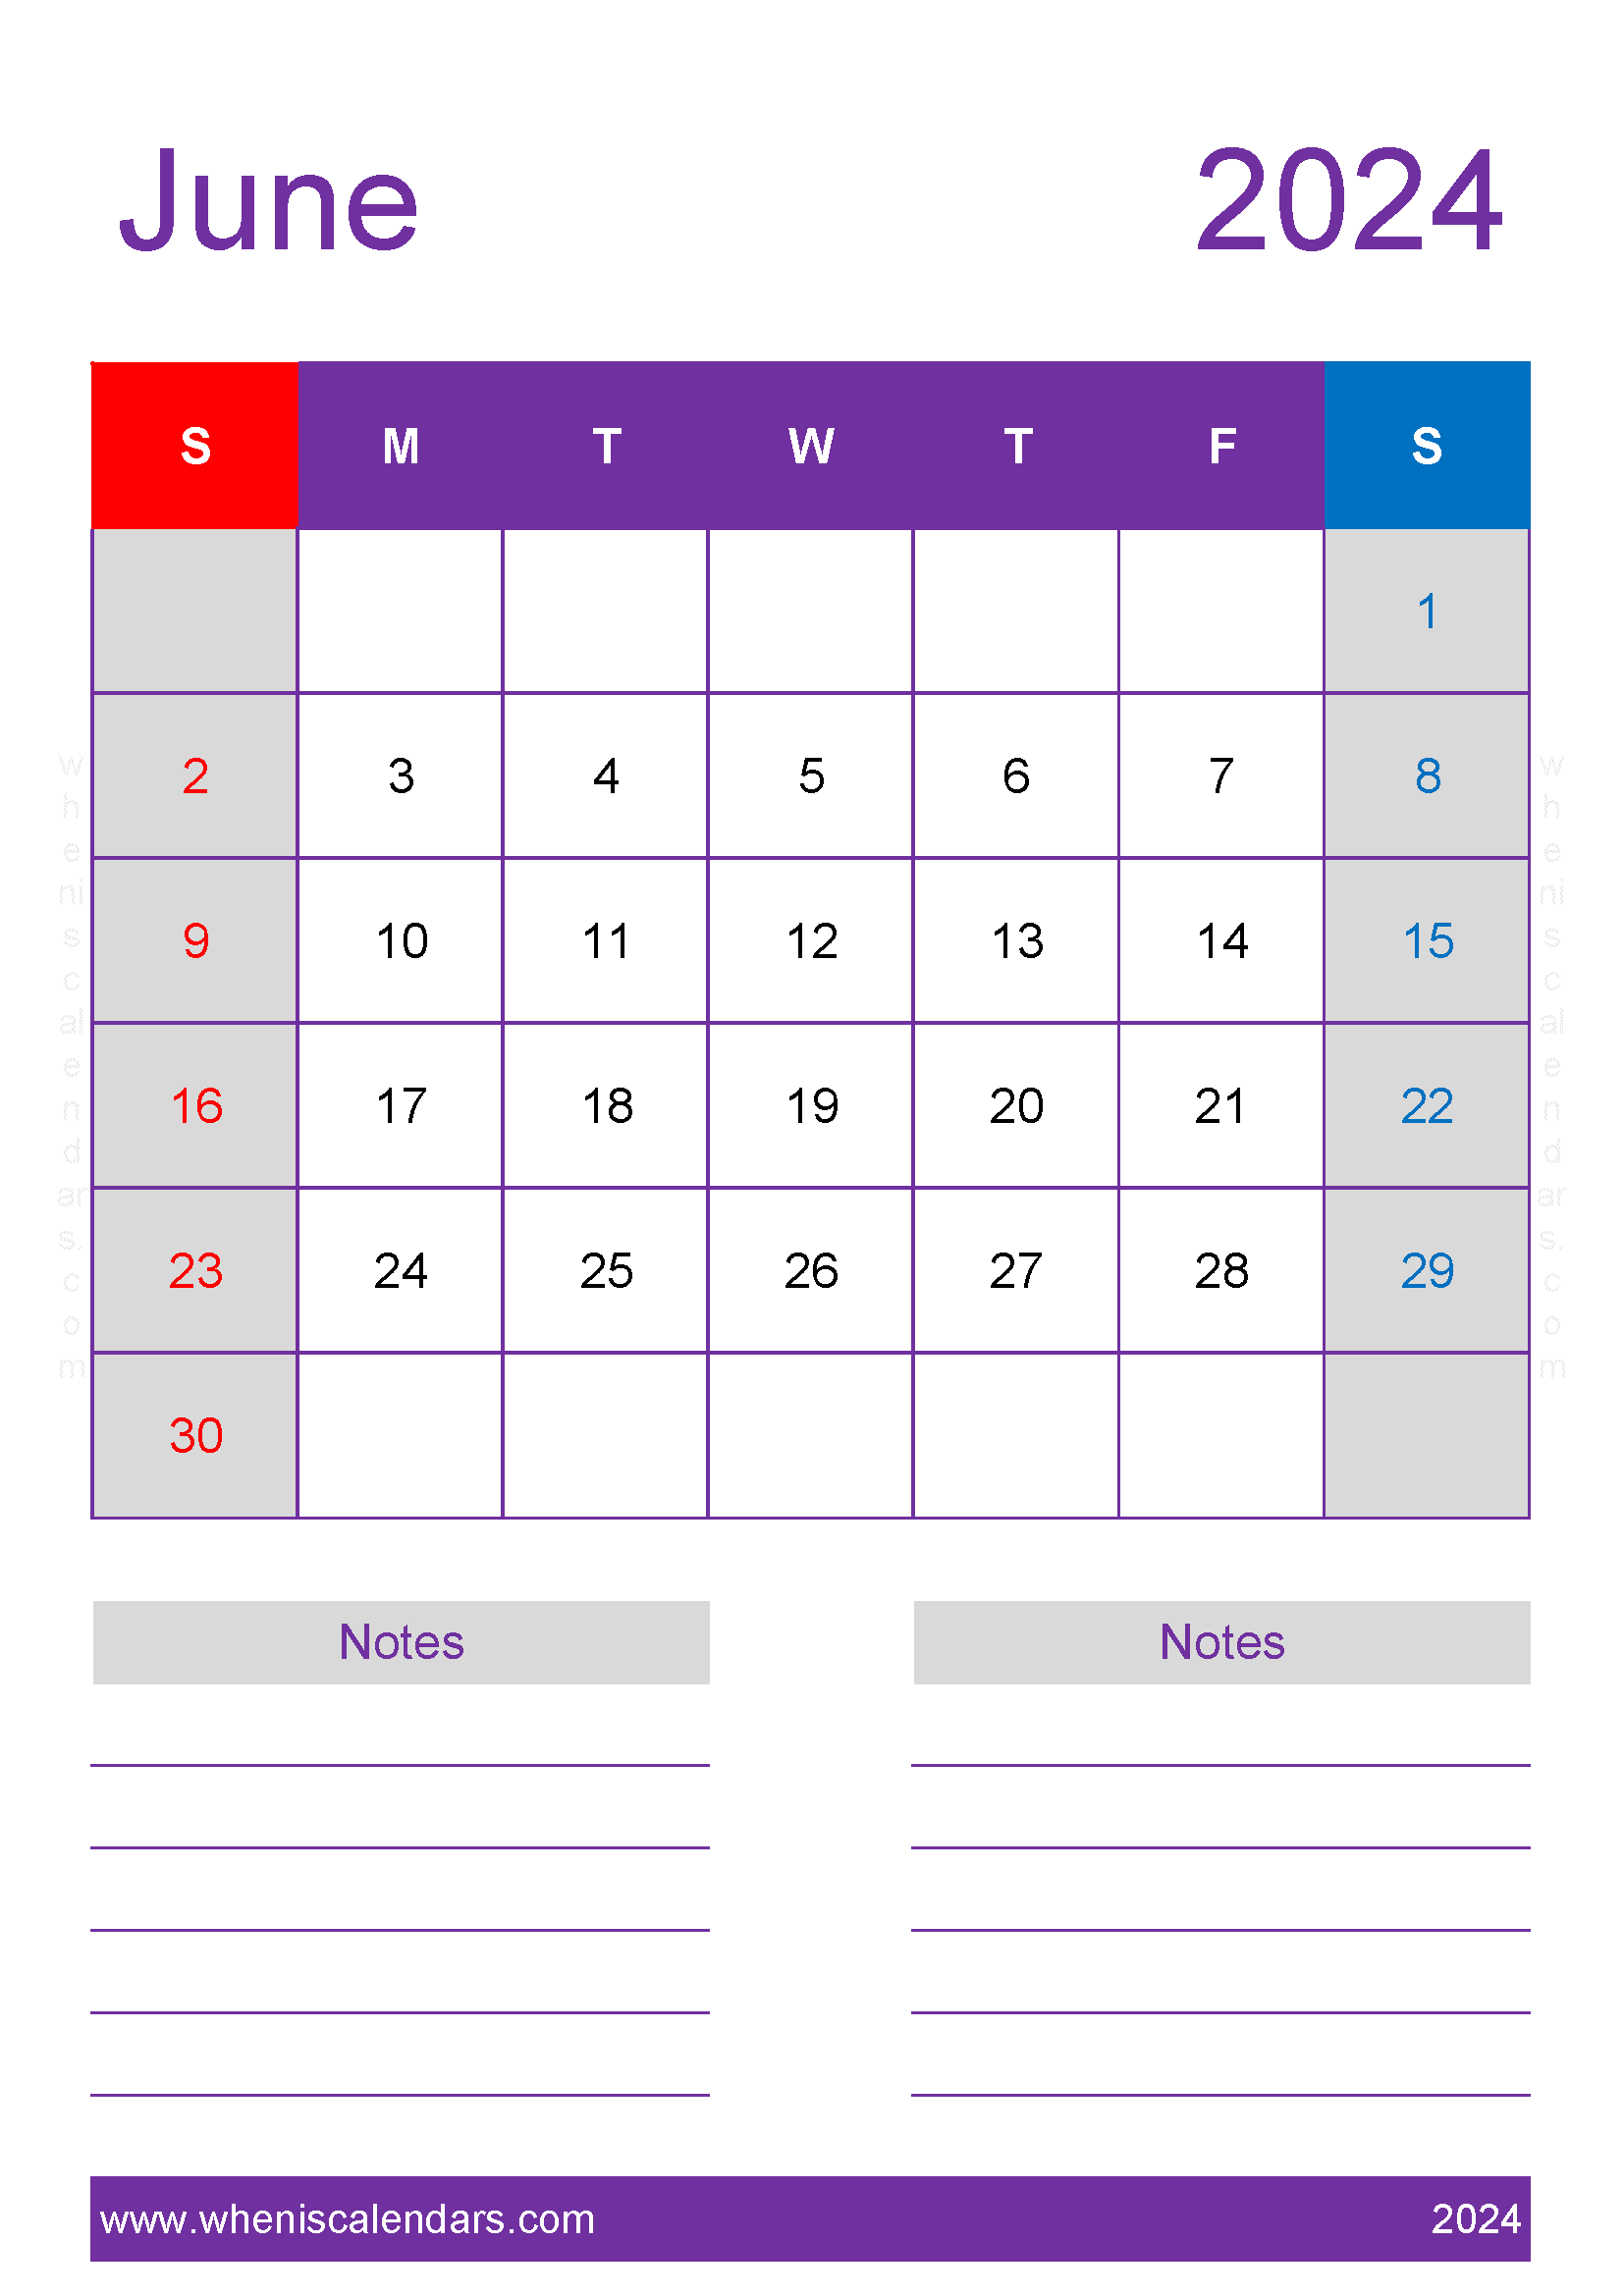 June 2024 Calendar large print Monthly Calendar